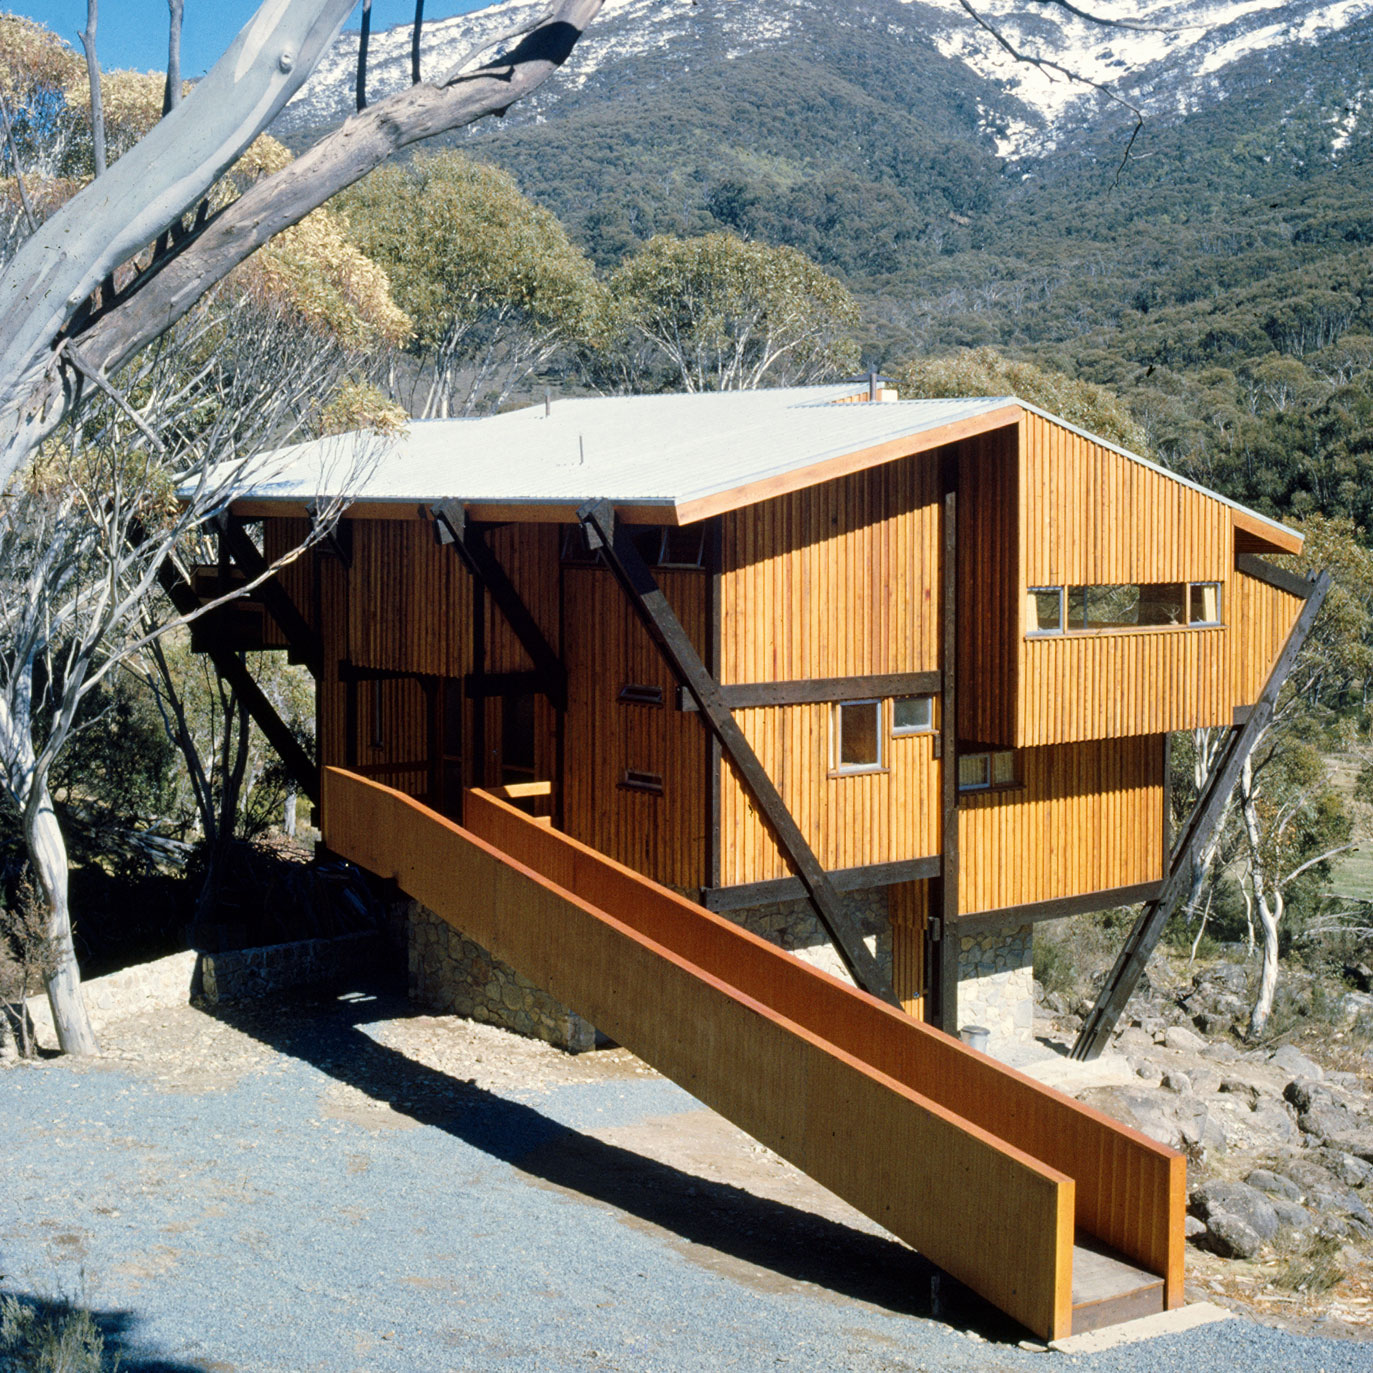 Thredbo Ski Lodge, Harry Seidler, Thredbo, New South Wales (AU), 1962. Max Dupain / Estate of Douglas Snelling, courtesy of Davina Jackson